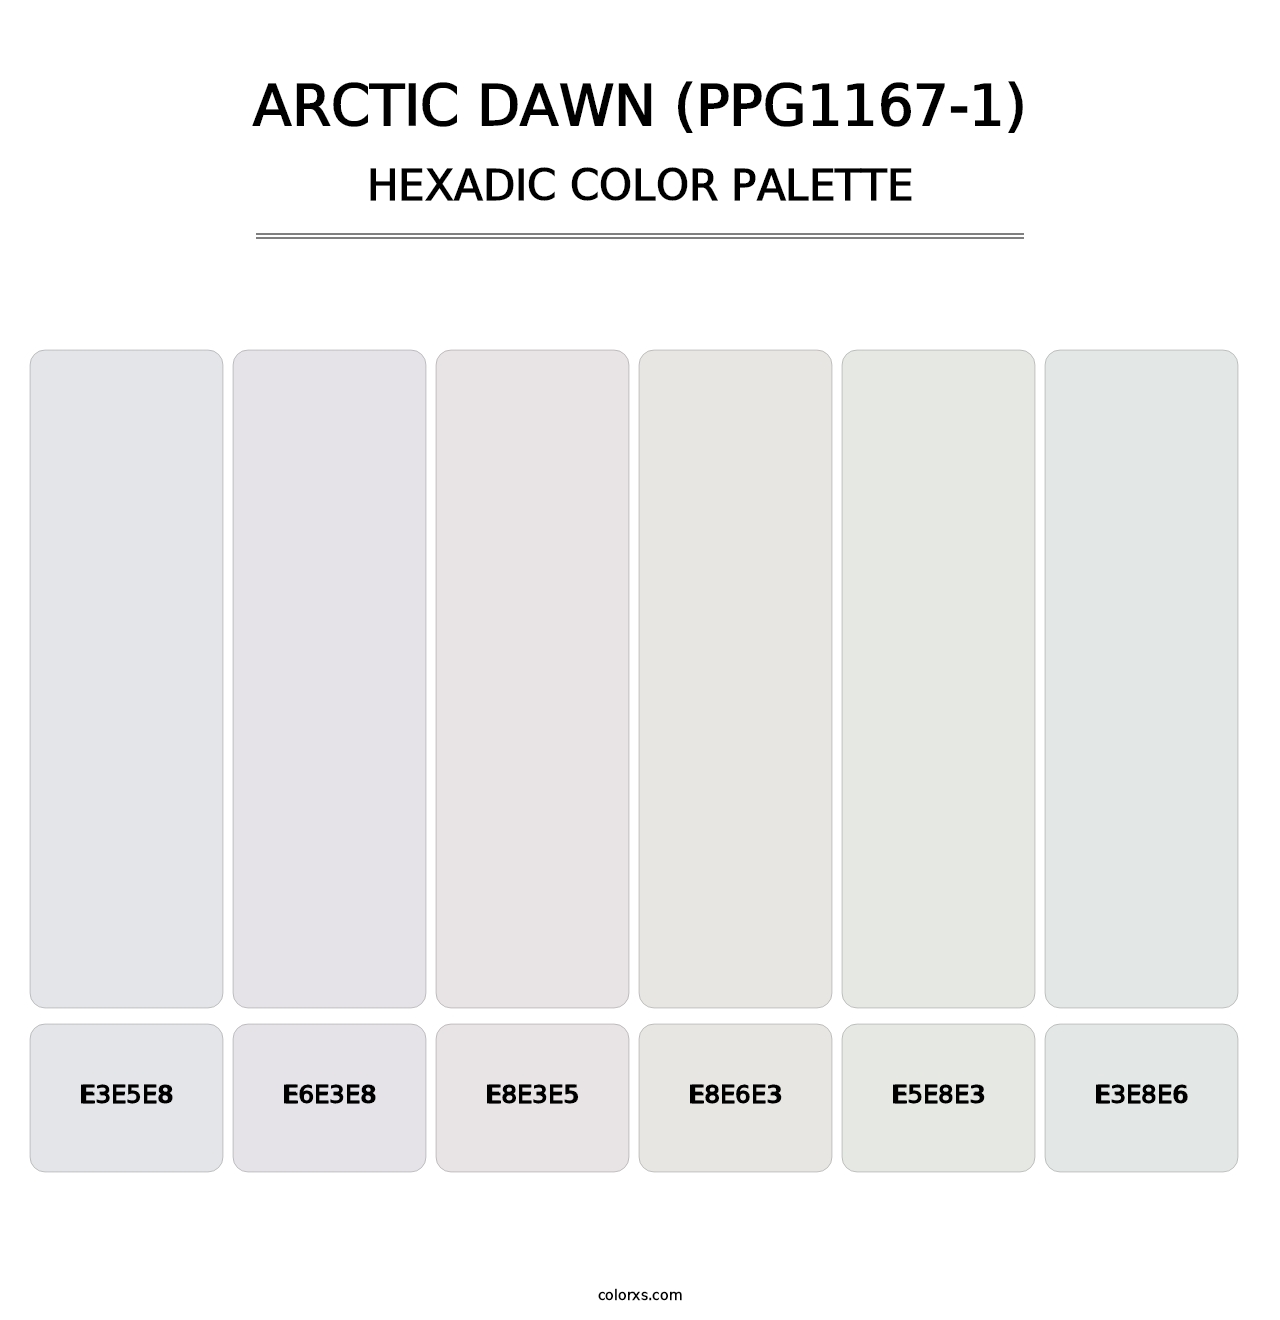 Arctic Dawn (PPG1167-1) - Hexadic Color Palette